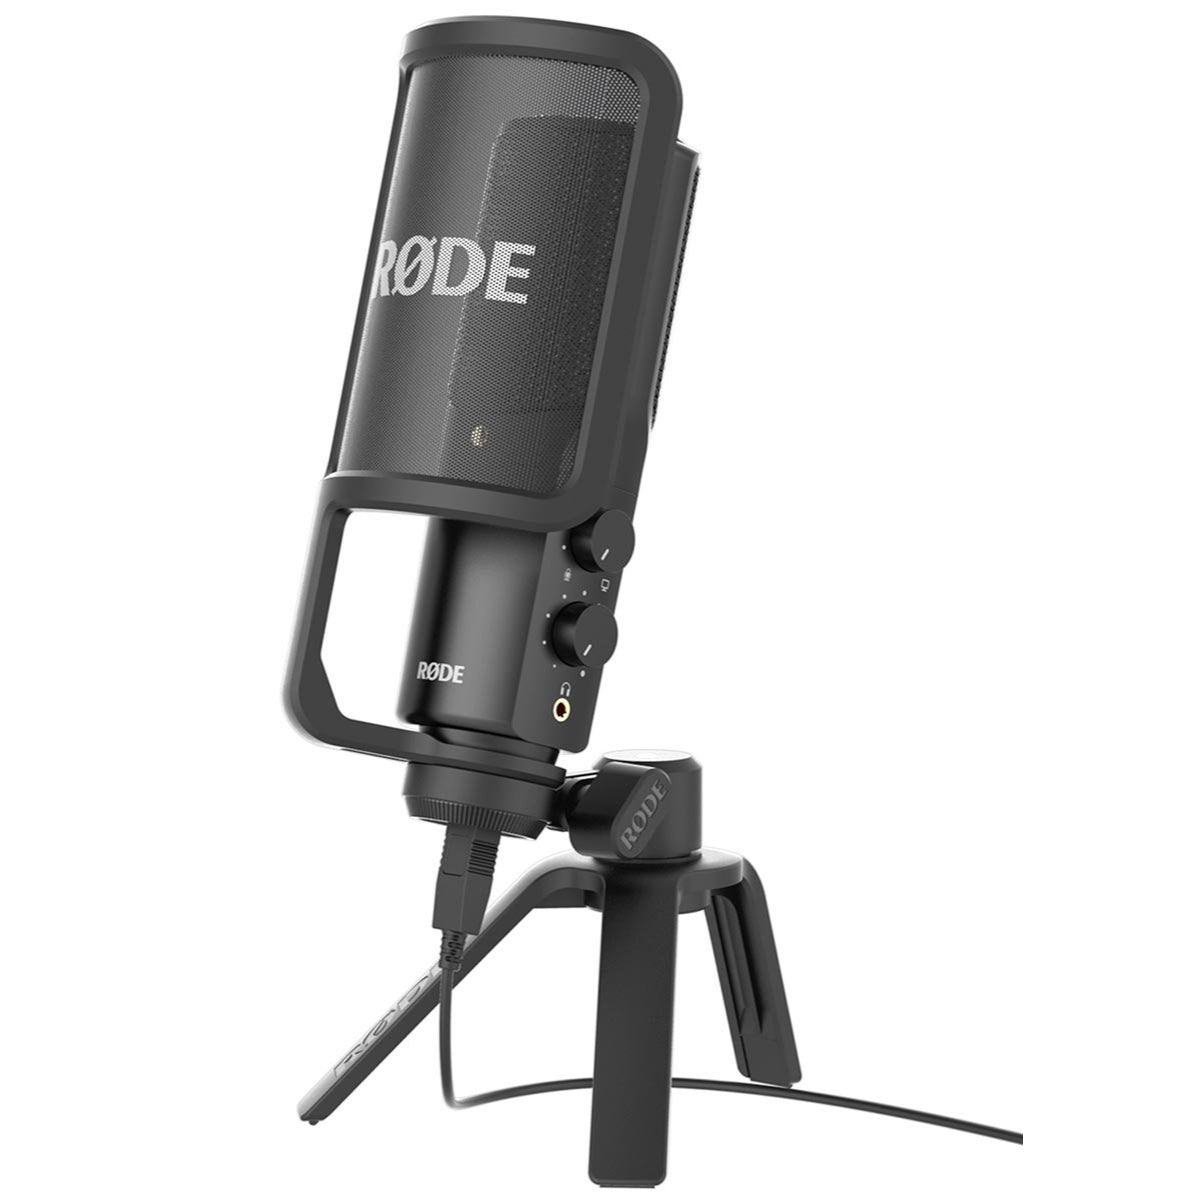 Rode NT-USB Studio-Quality Microphone